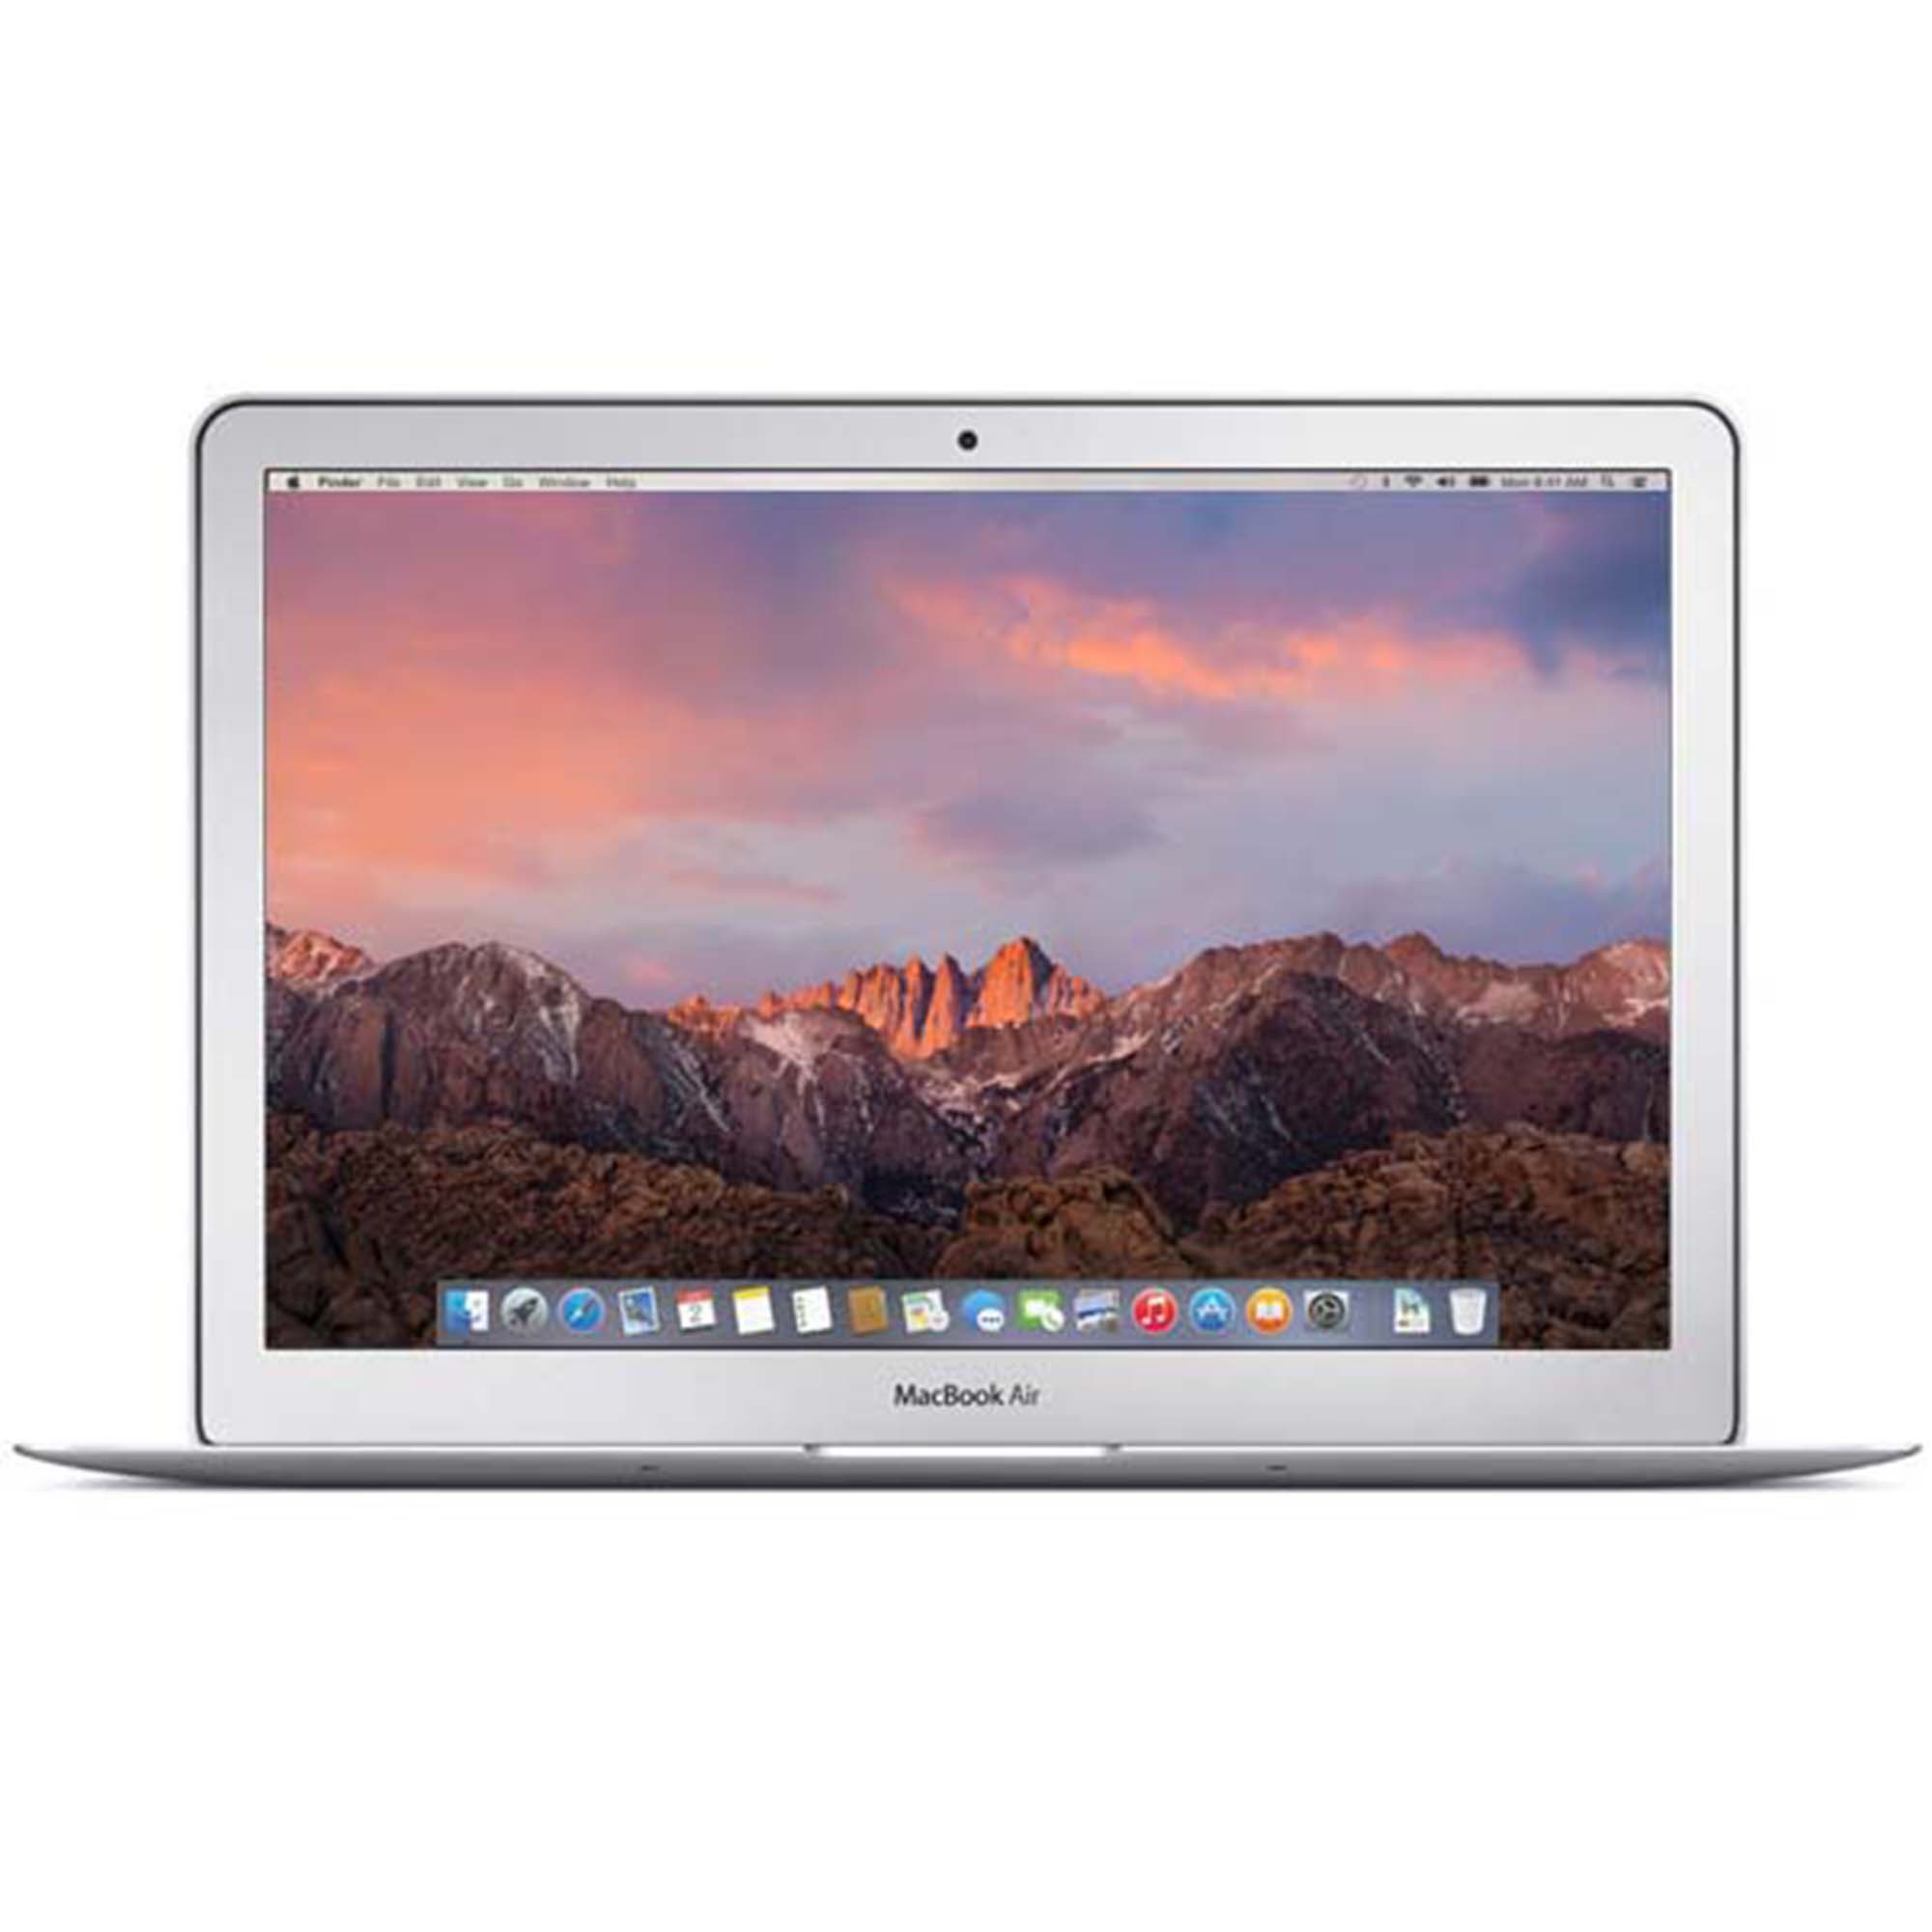 Restored Apple MacBook Air Laptop 13", Intel Core i7, 8GB RAM, 512GB HD, Mac OS 10.15 Catalina, Silver, MF068LL/A (Refurbished) - image 1 of 5